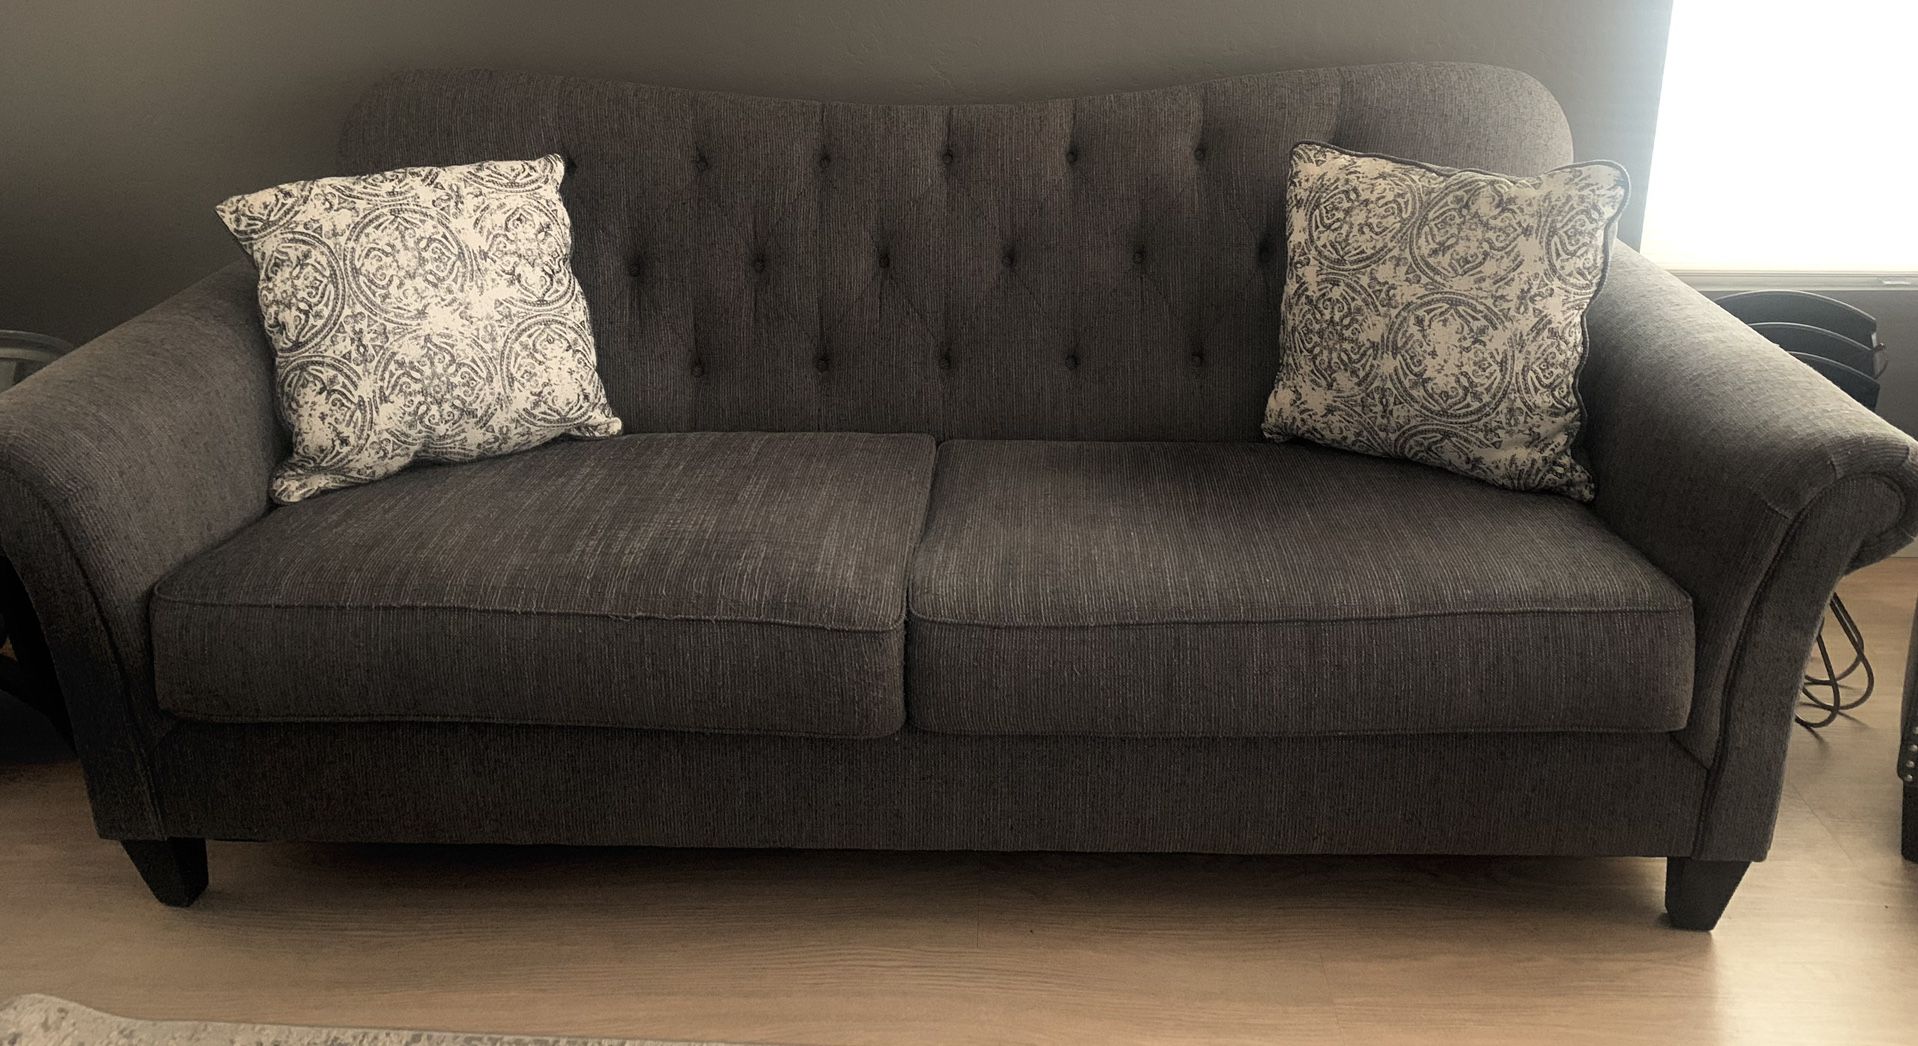 Grey Fabric Sofa and Loveseat